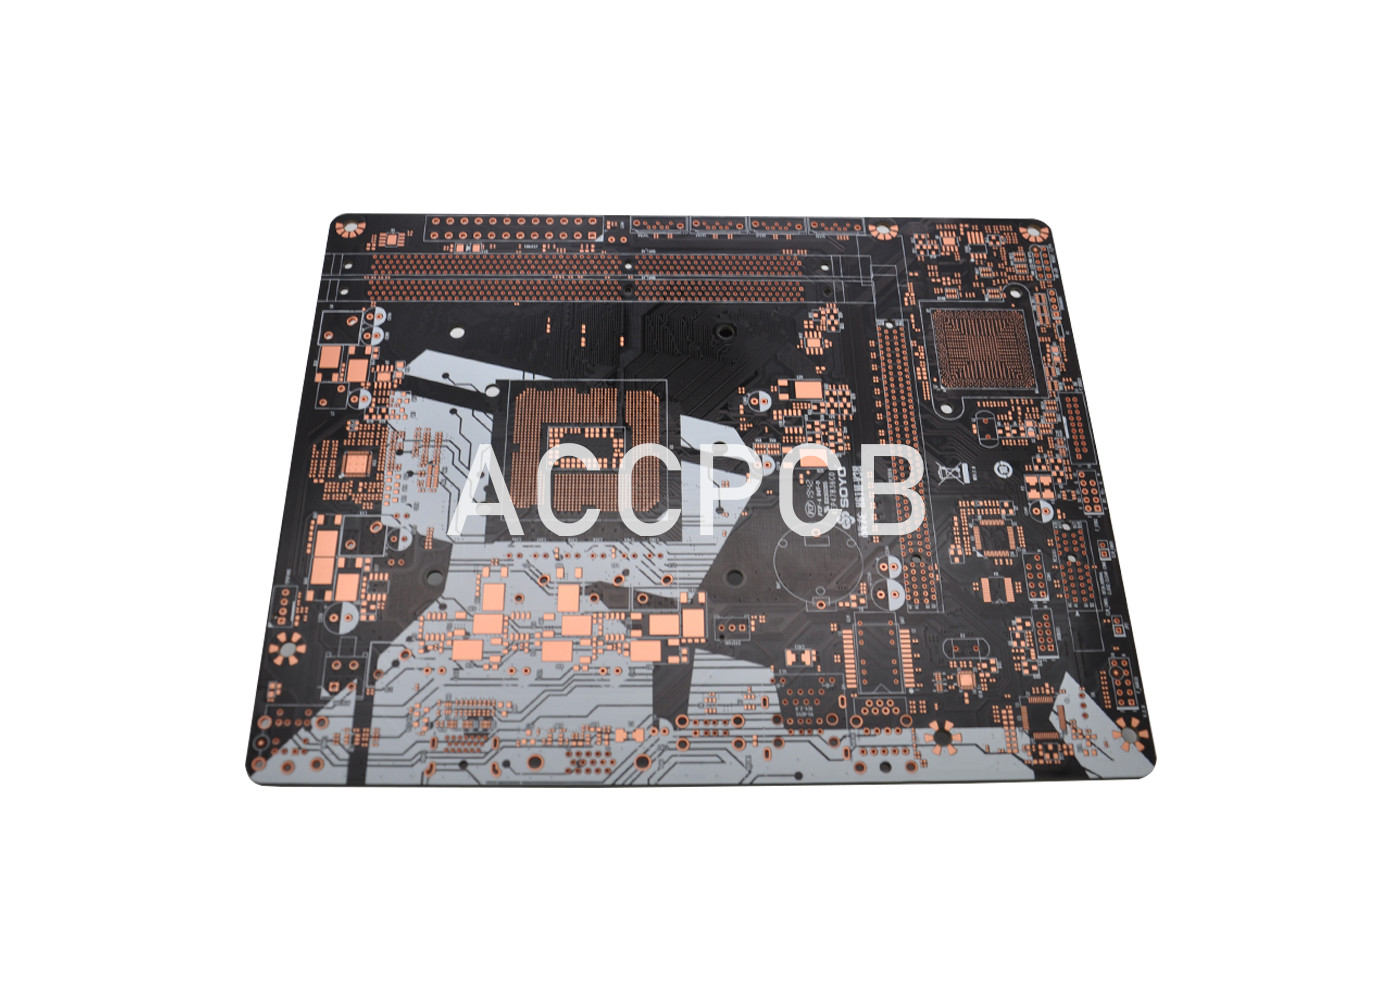 OEM 4 Layer PWB Circuit Board TG150 Material OSP Surface Finish للوحة الرئيسية لأجهزة الكمبيوتر